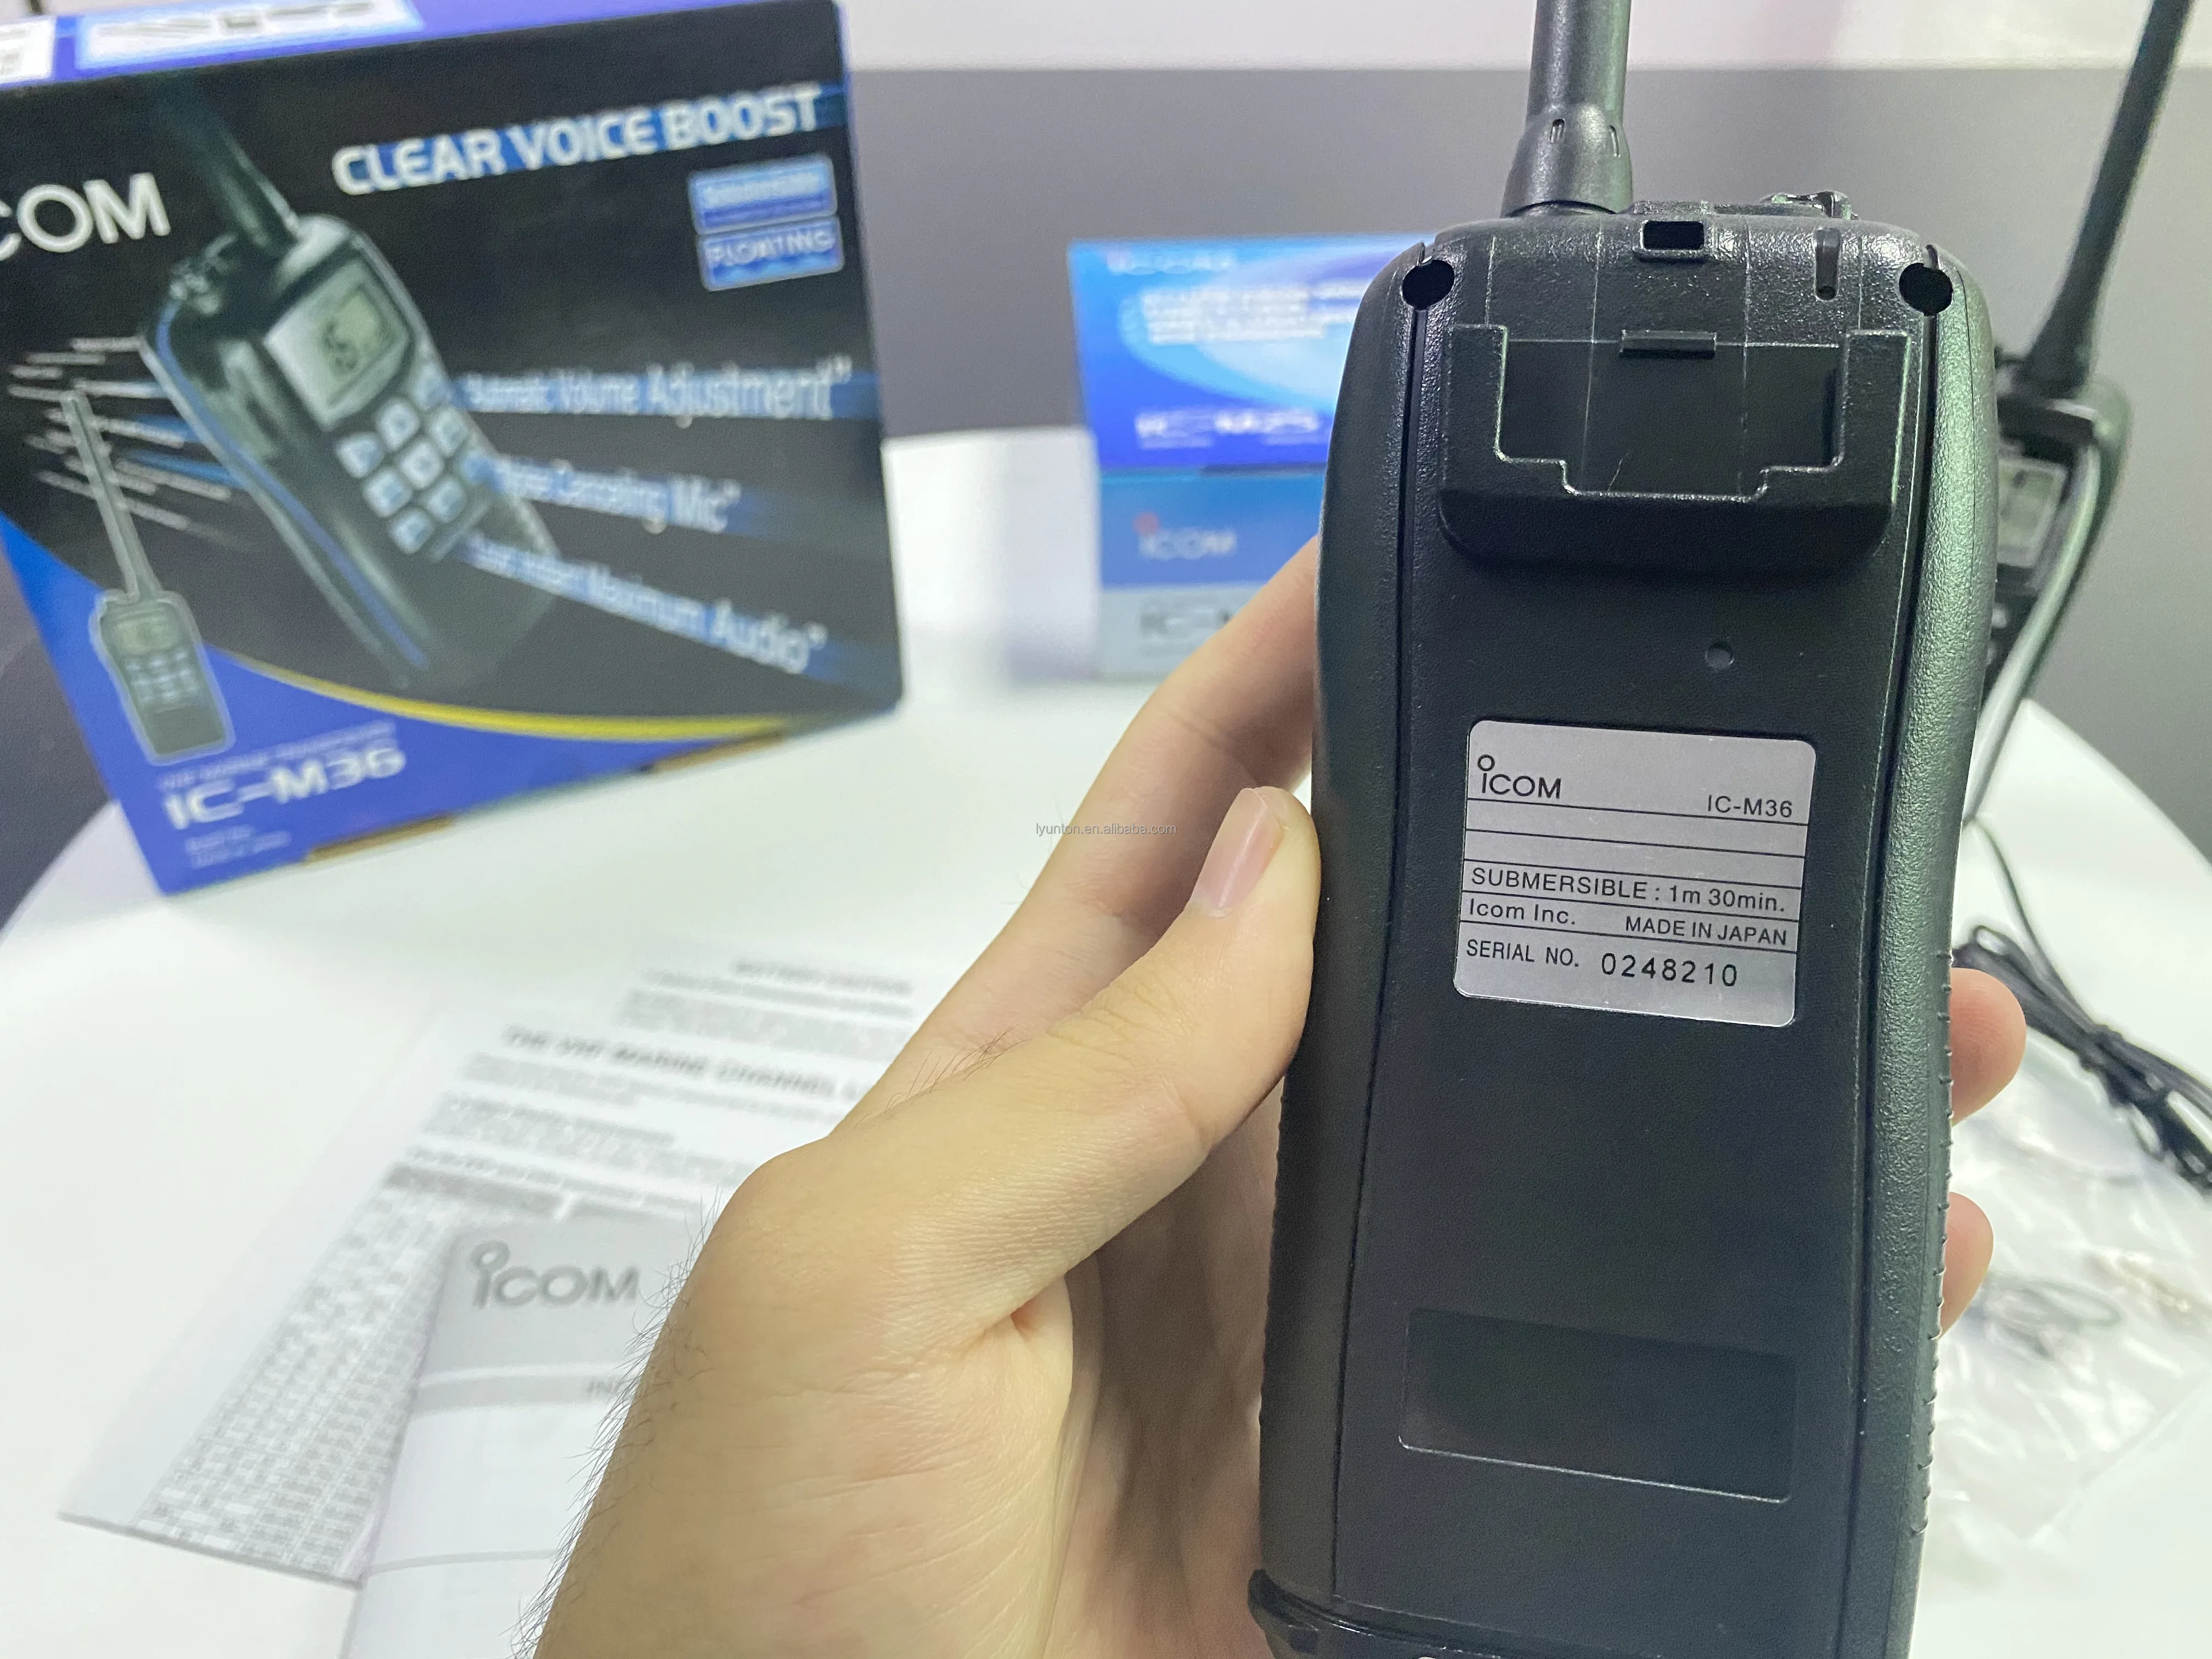 ICOM VHF MARINE TRANSCEIVER IC-M36 USB Charing IPX7 waterproof walkie taklie